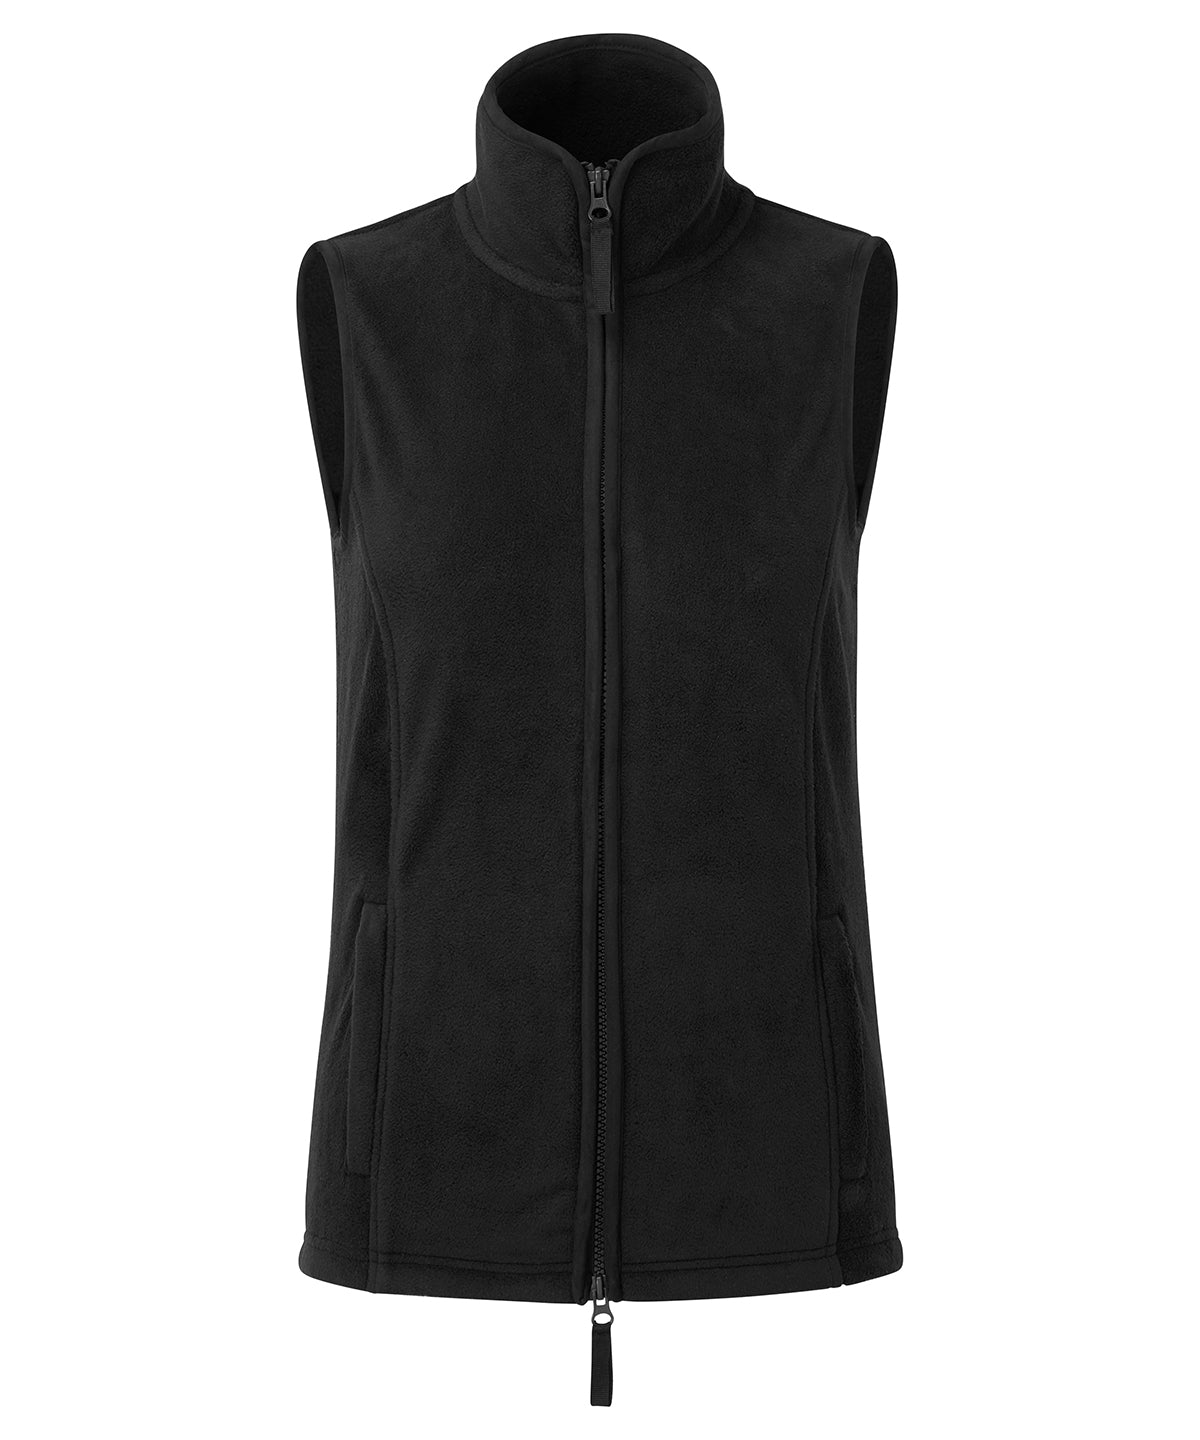 Premier PR804 Women's artisan fleece gilet High-neck rounded collar  leading into a two-way zipper 100% Polyester - COOZO